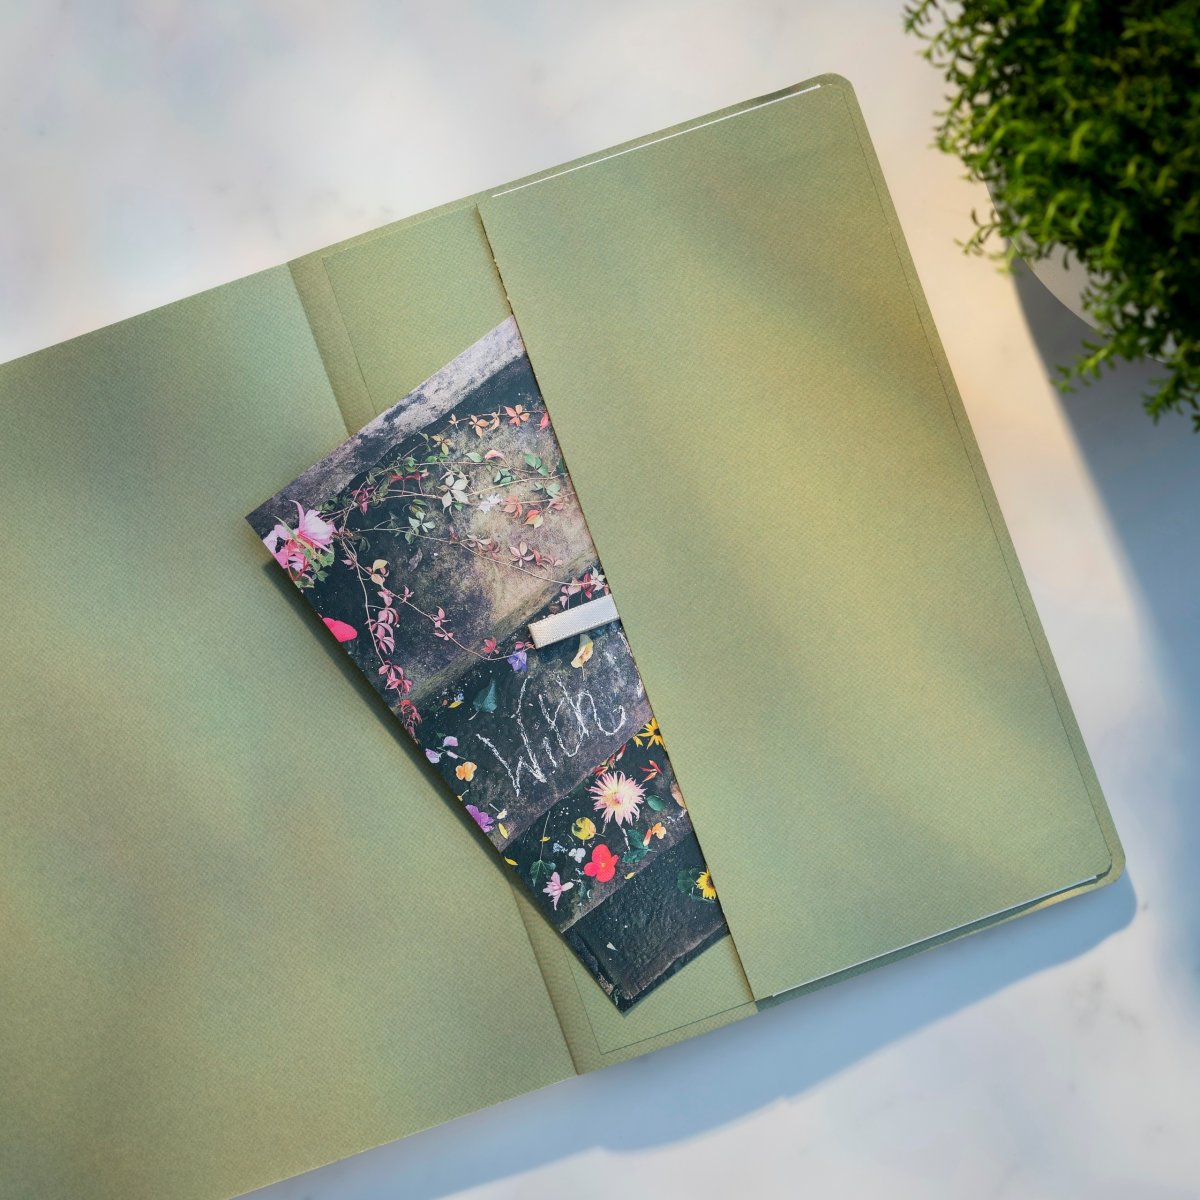 Burde Notebook Deluxe | A5 | Green